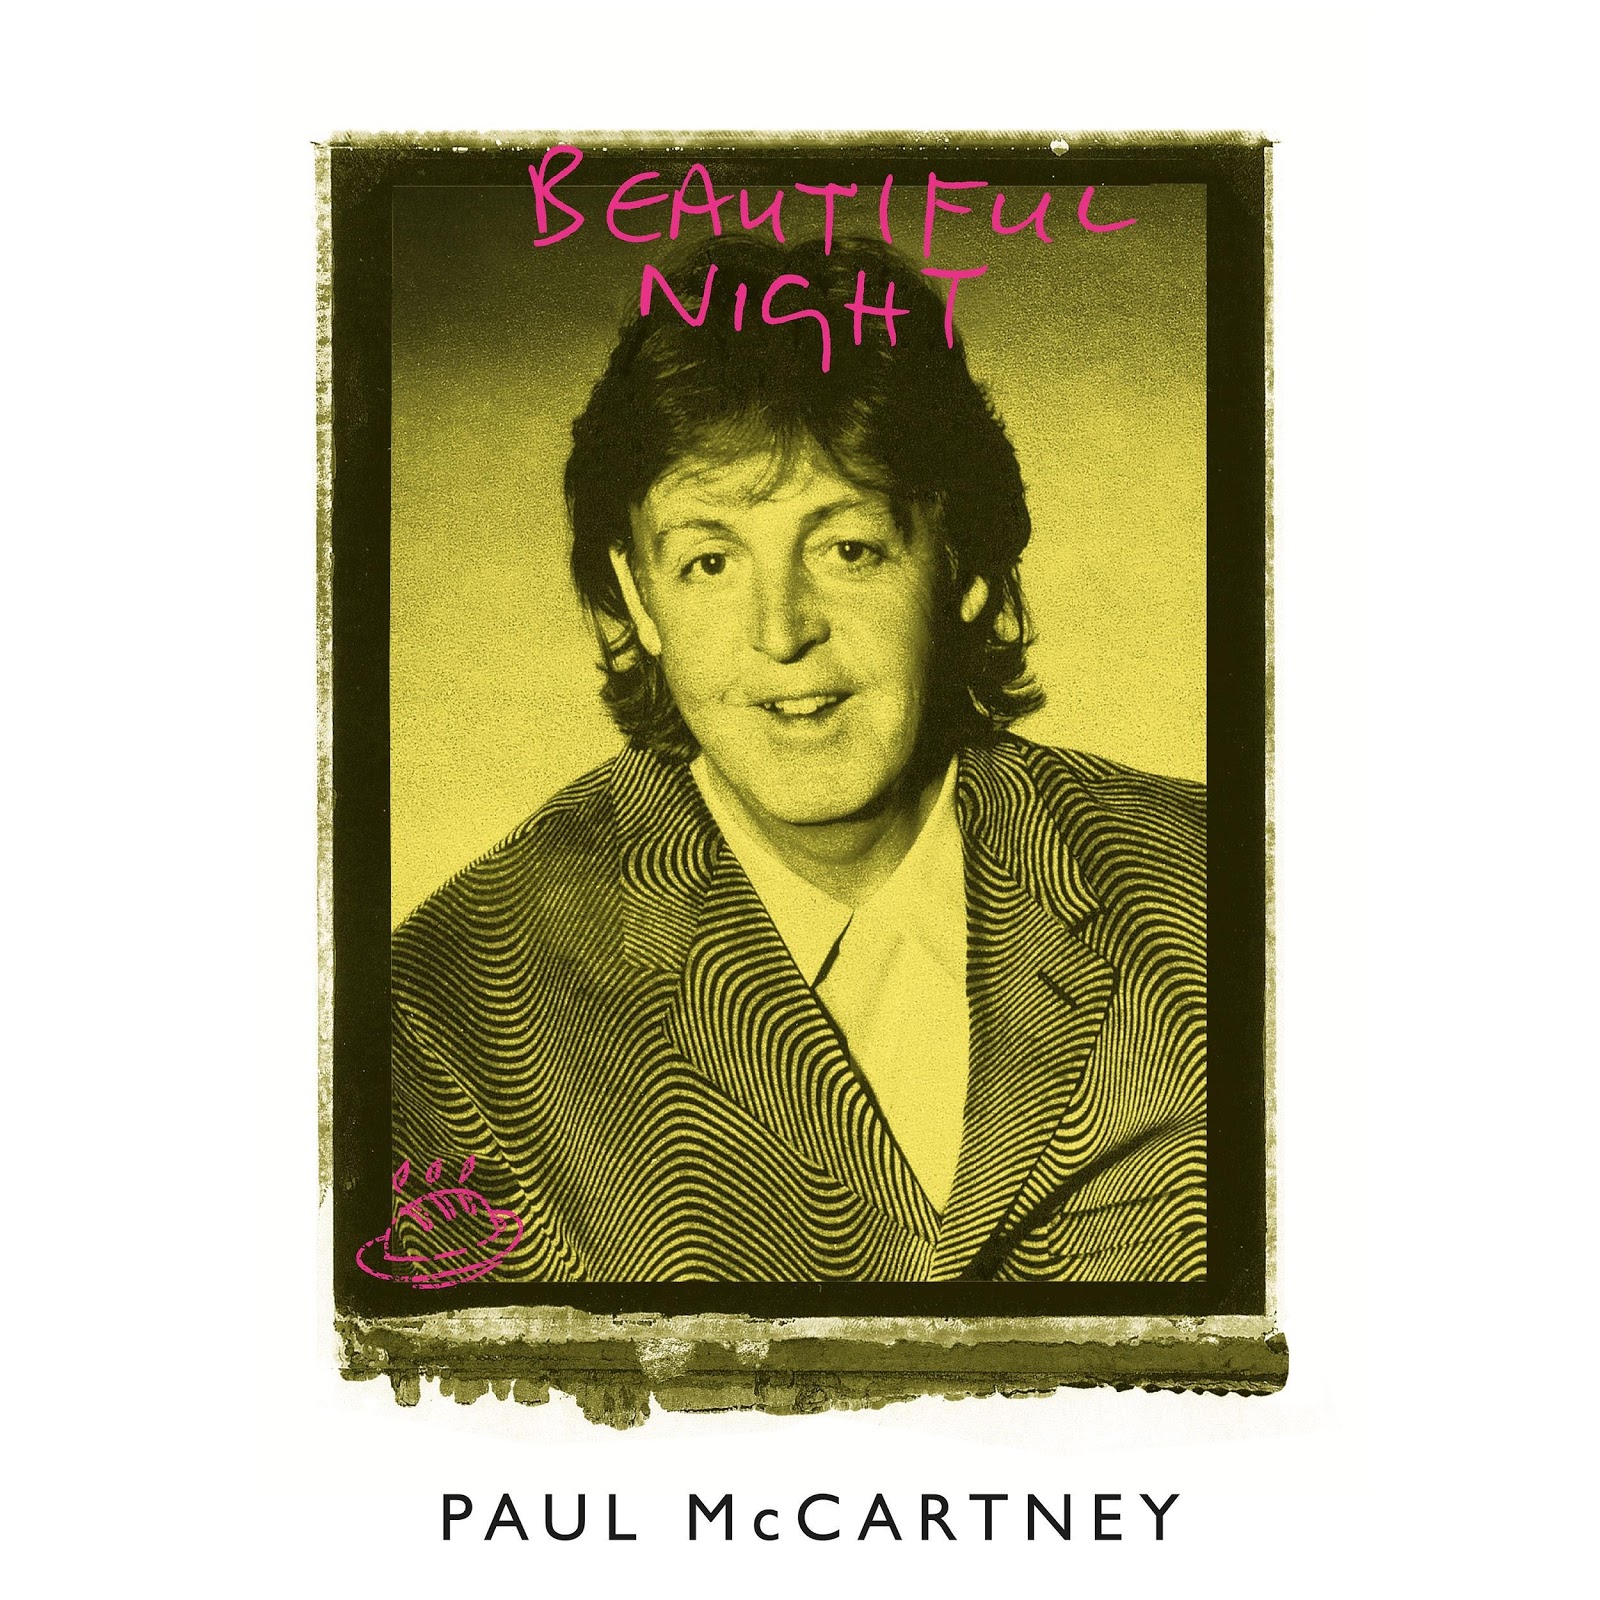 PAUL McCARTNEY: BEAUTIFUL NIGHT EP RELEASED TODAY